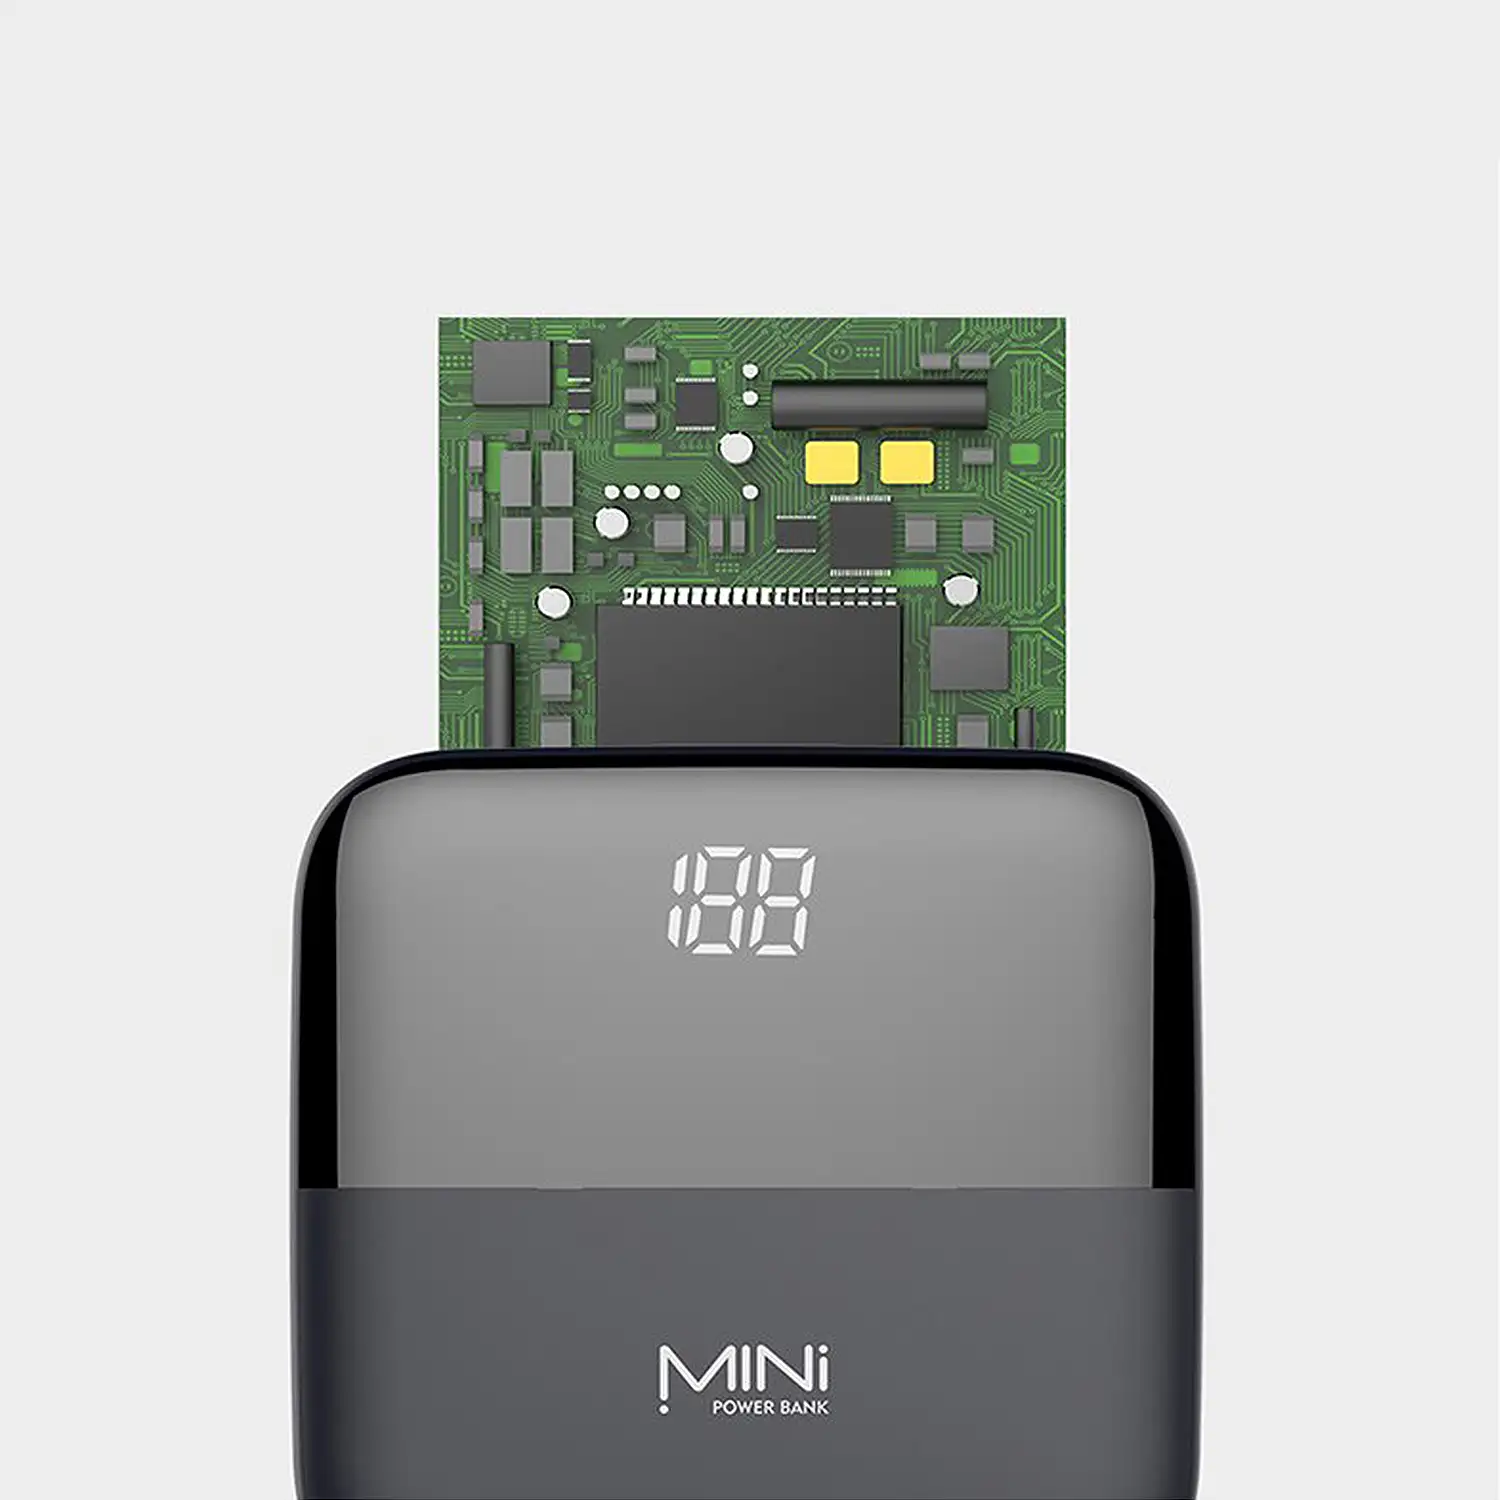 Mini batería externa portátil powerbank 10.000mAh. Conexiones USB x2, Lightning y USB-C.